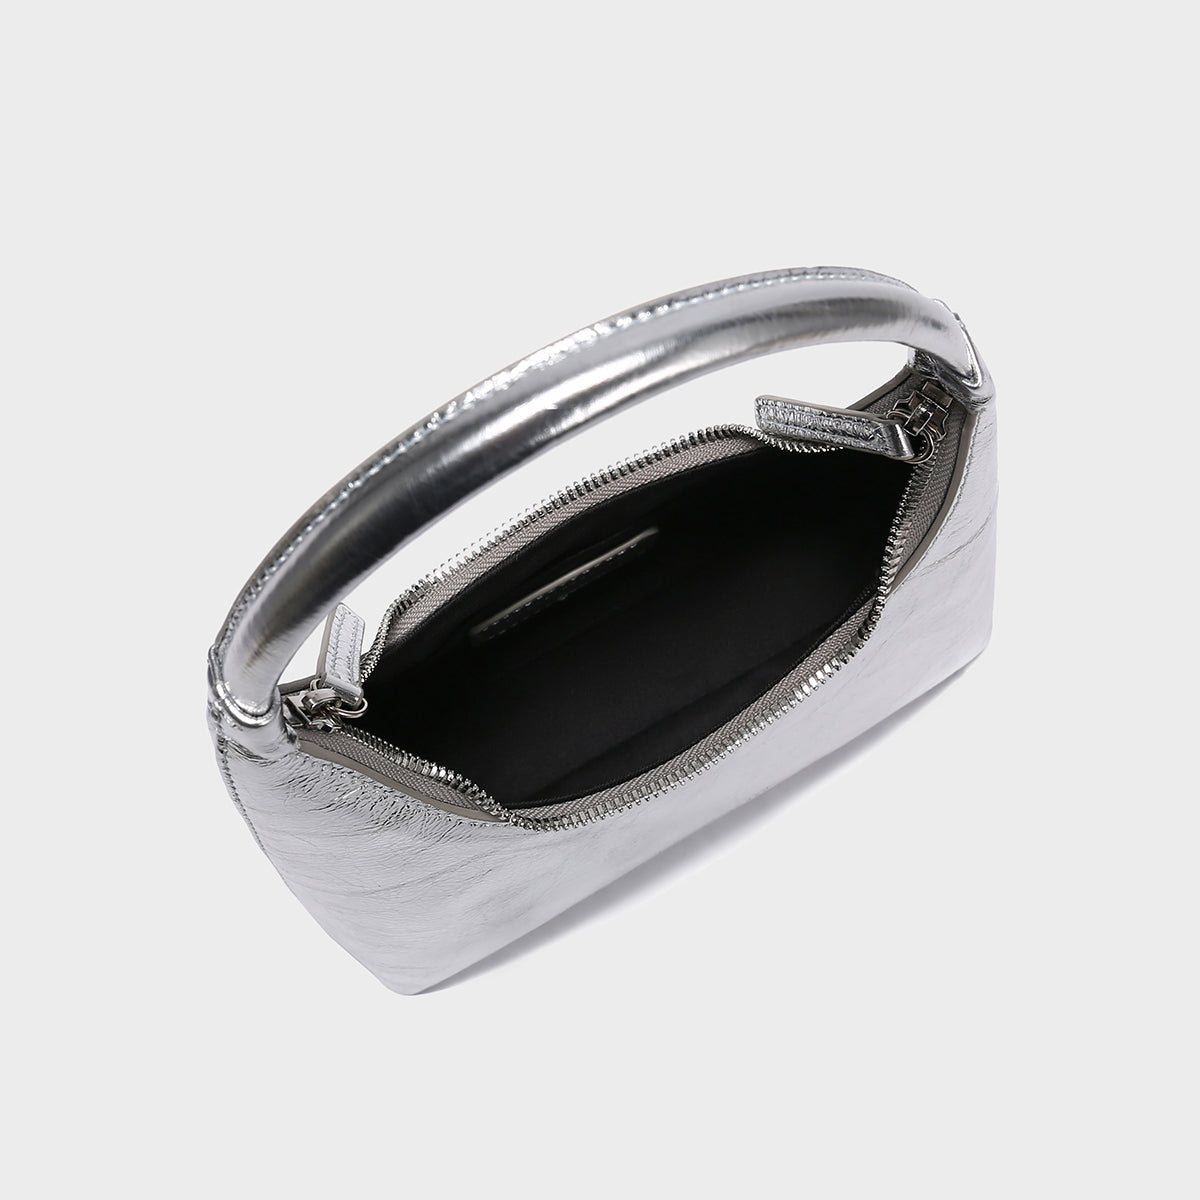 futuristic-metallic-silver-mini-shoulder-bag_all_4.jpg